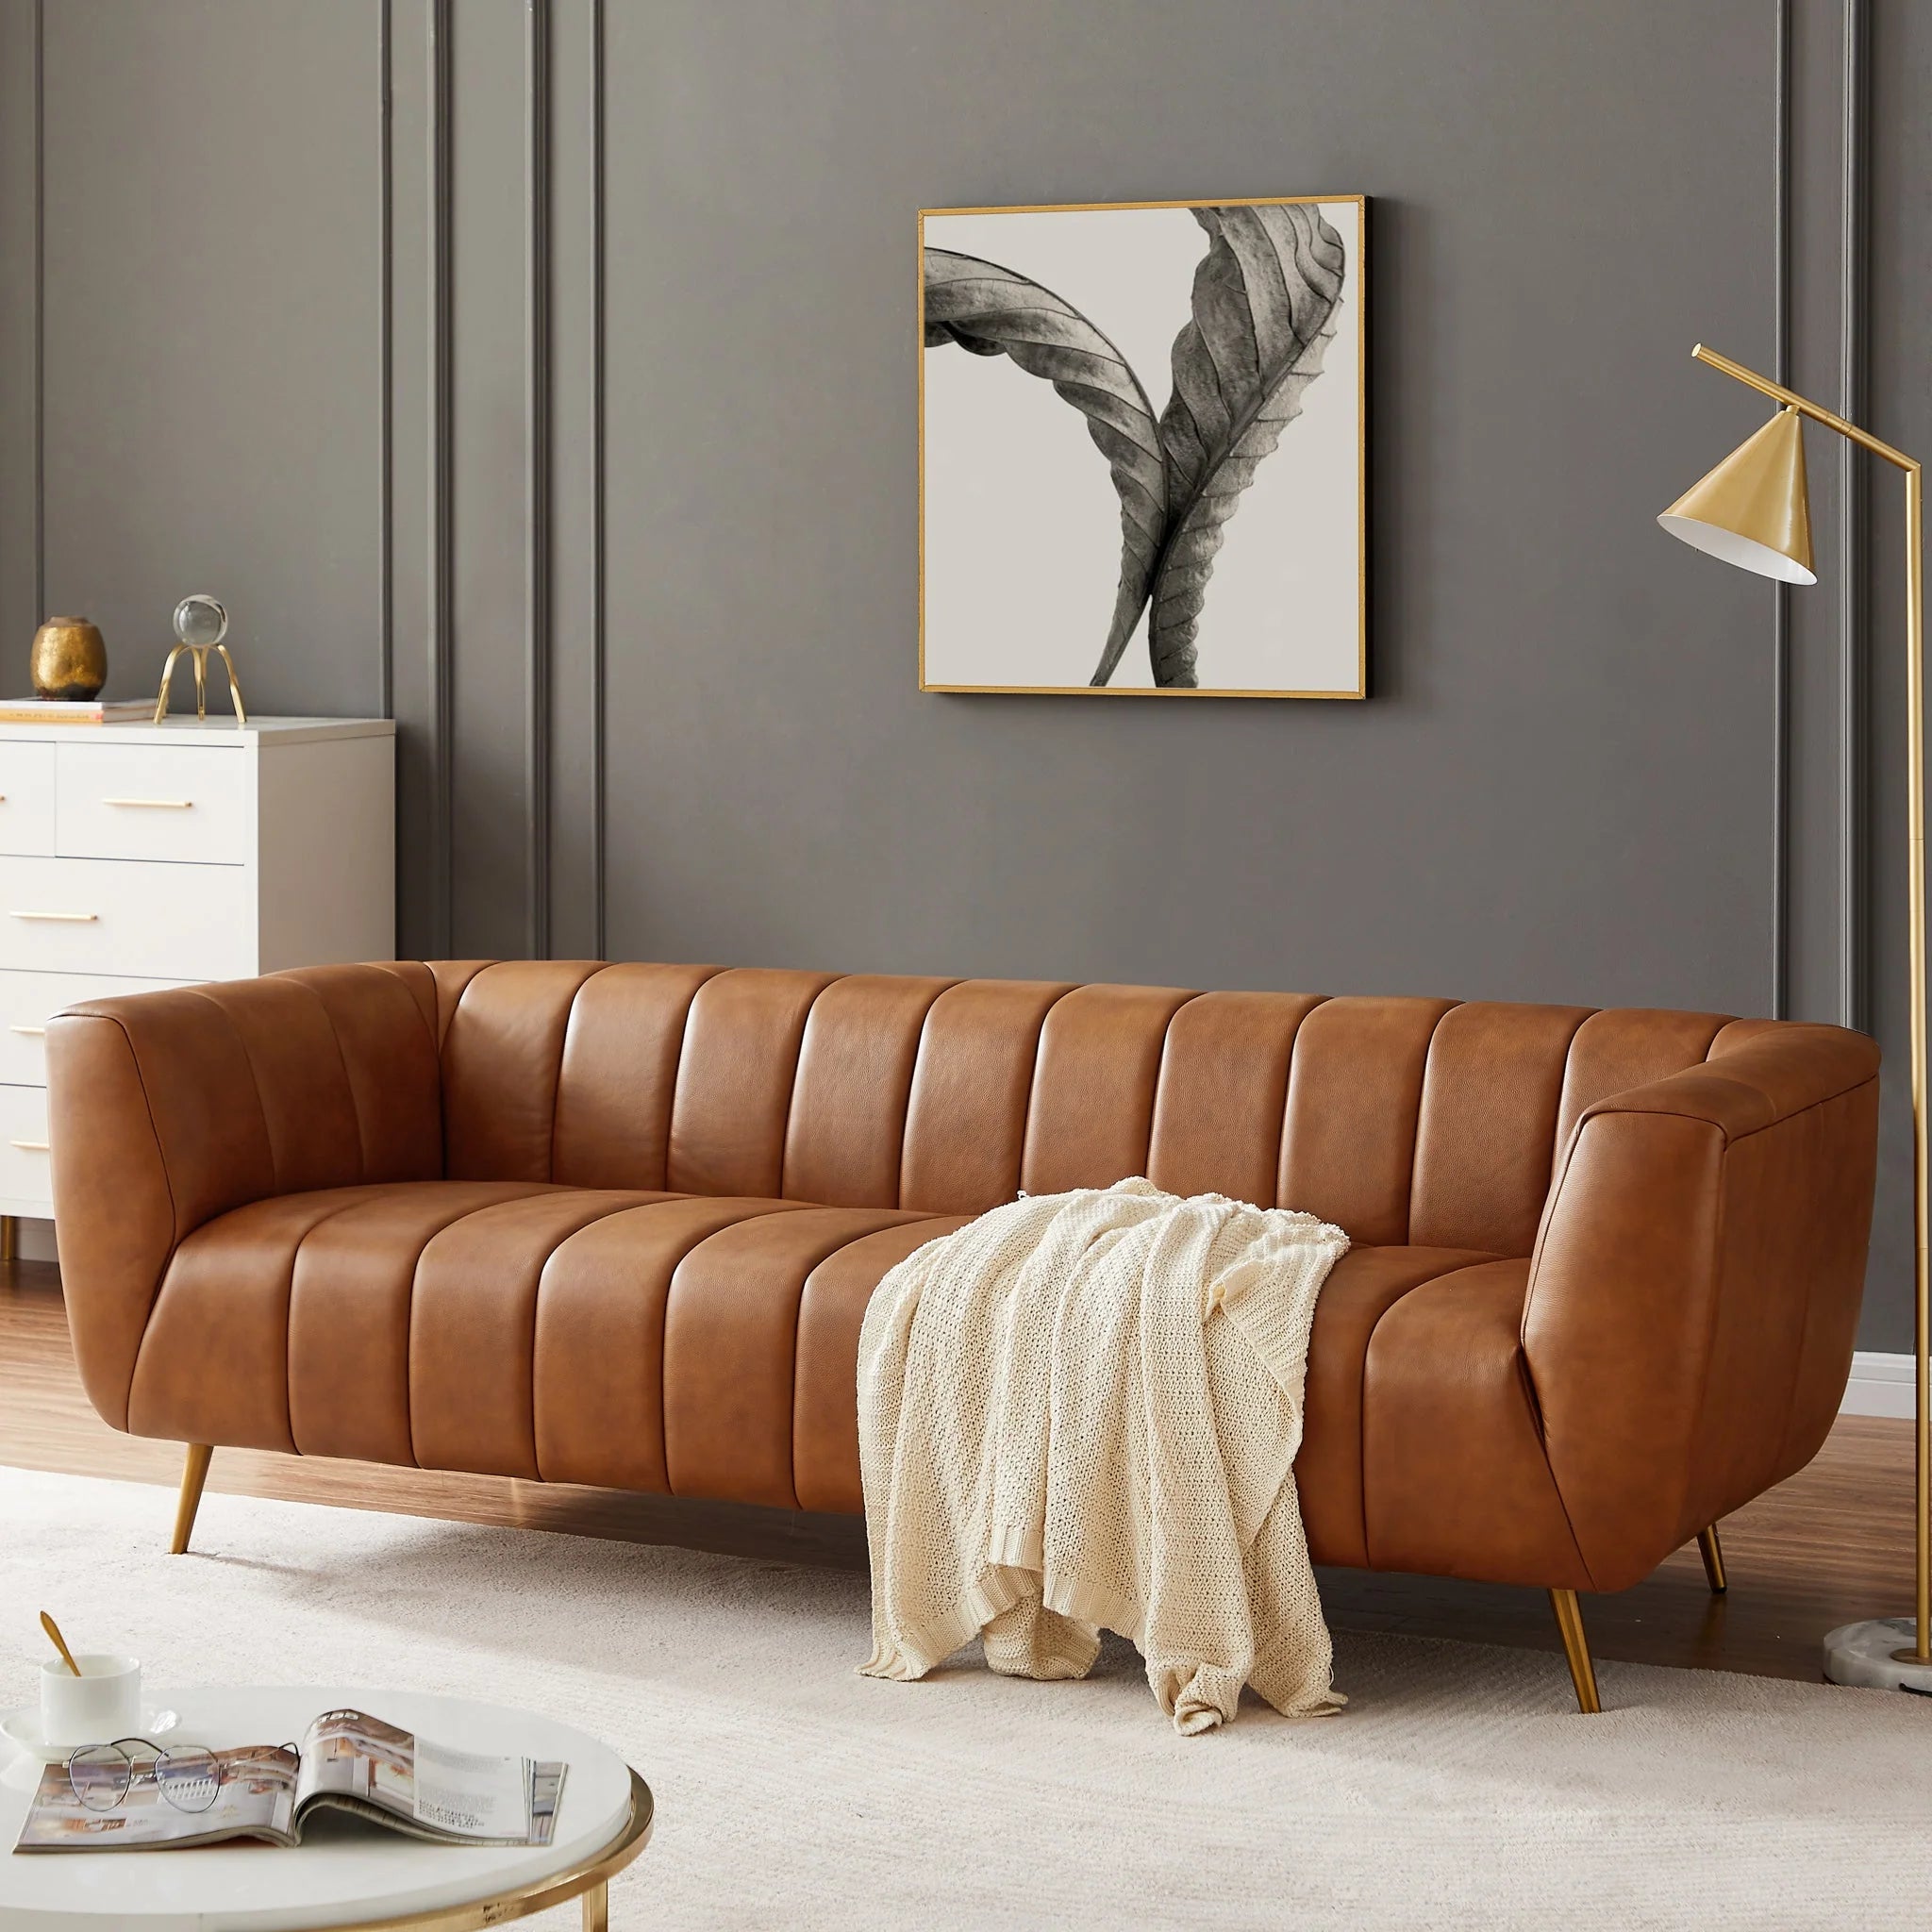 AVA Cognac Leather Sofa